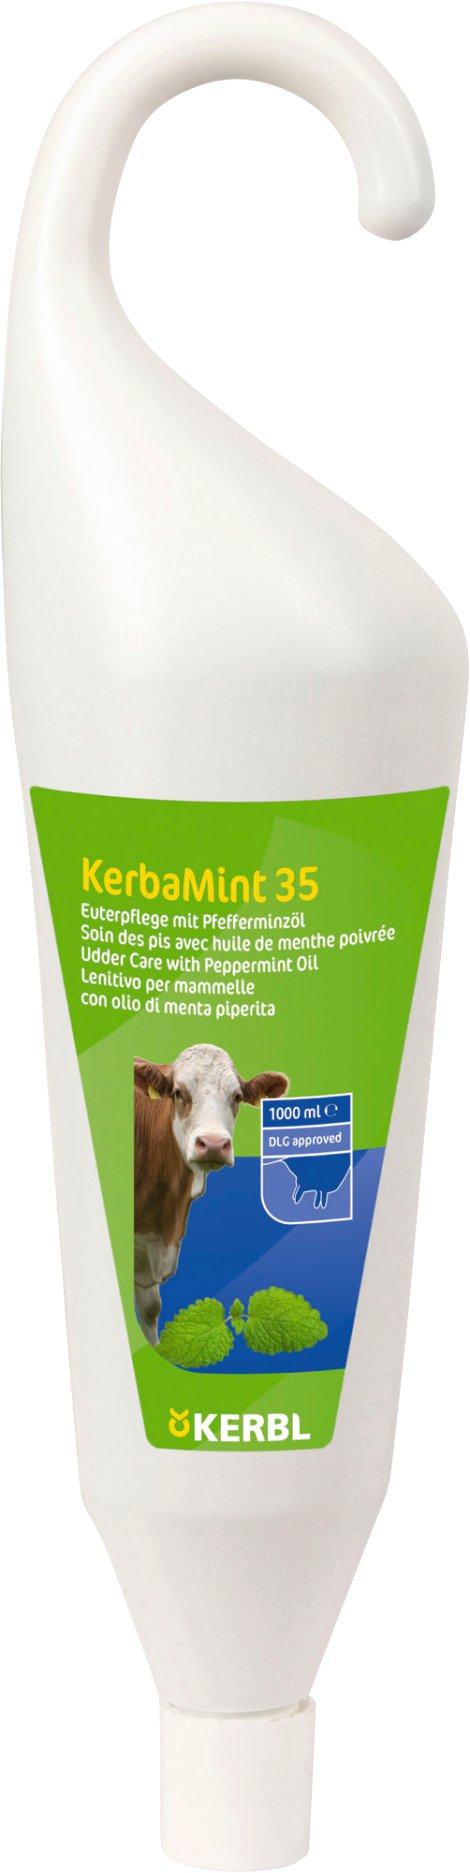 Euterpflegemittel KerbaMint 35, 1 l